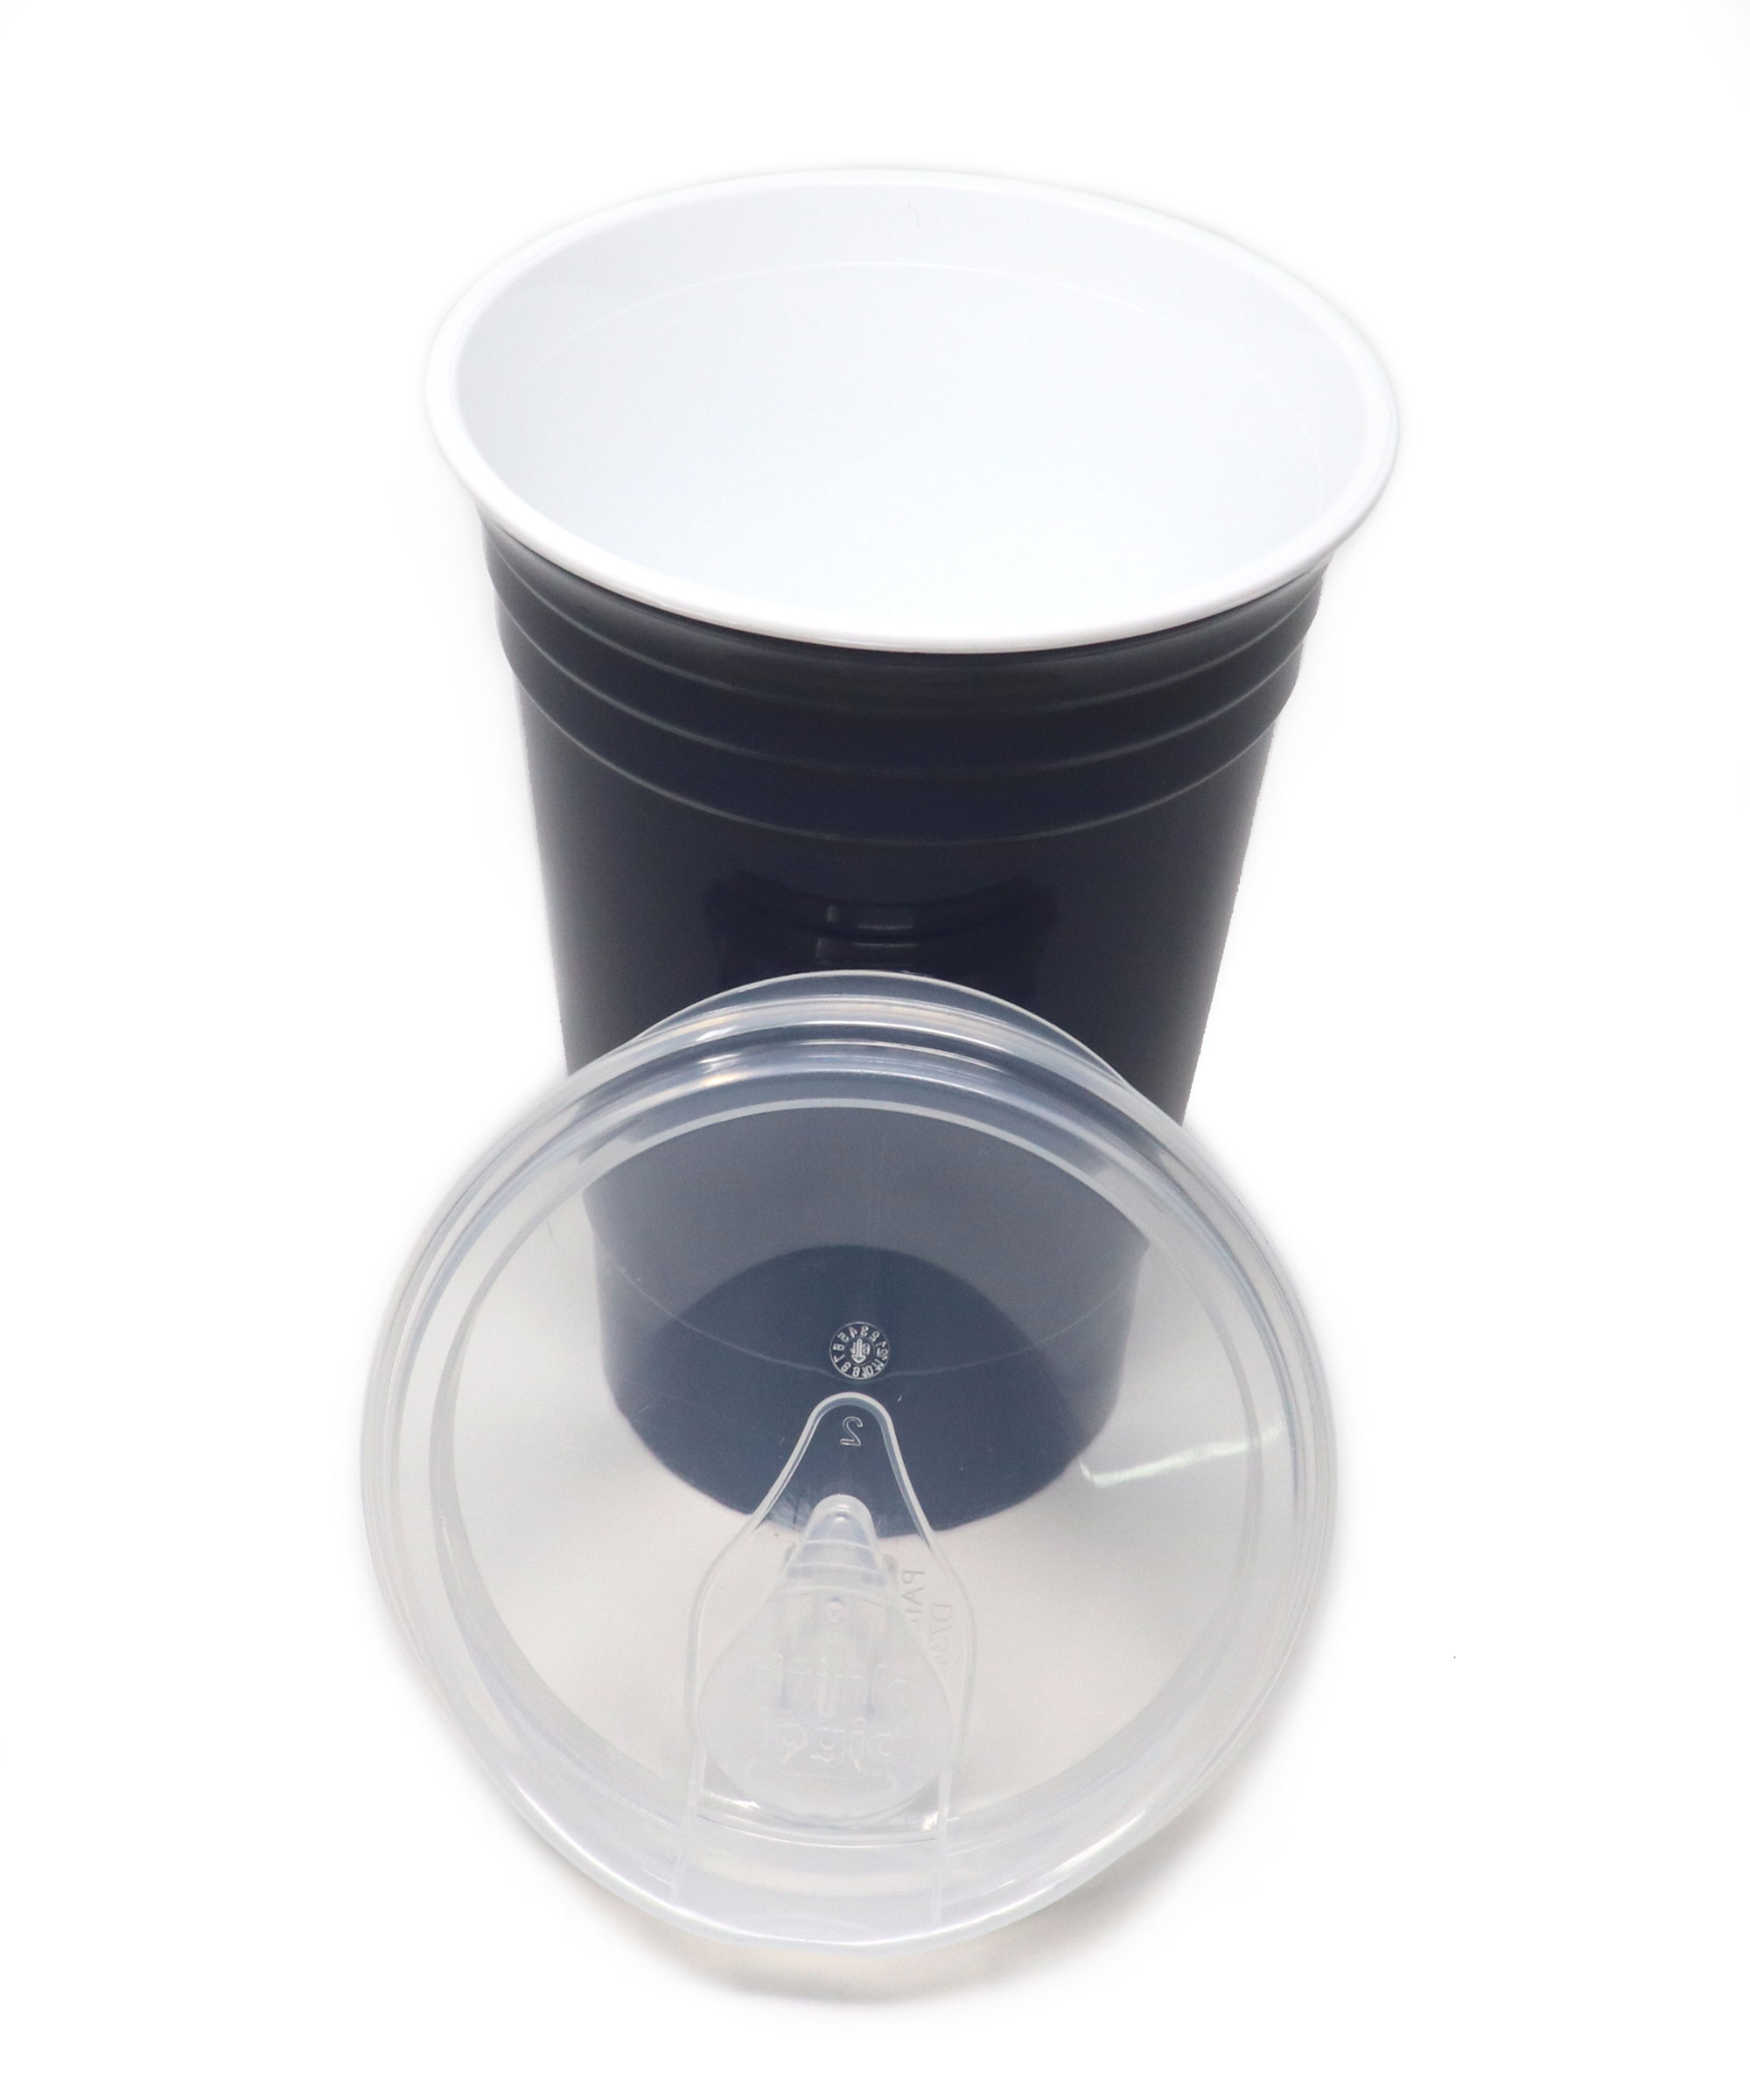 Rolling Sands 12oz Reusable Plastic Kids Cups Red (Set of 18, Made in USA,  No BPA) Dishwasher Safe